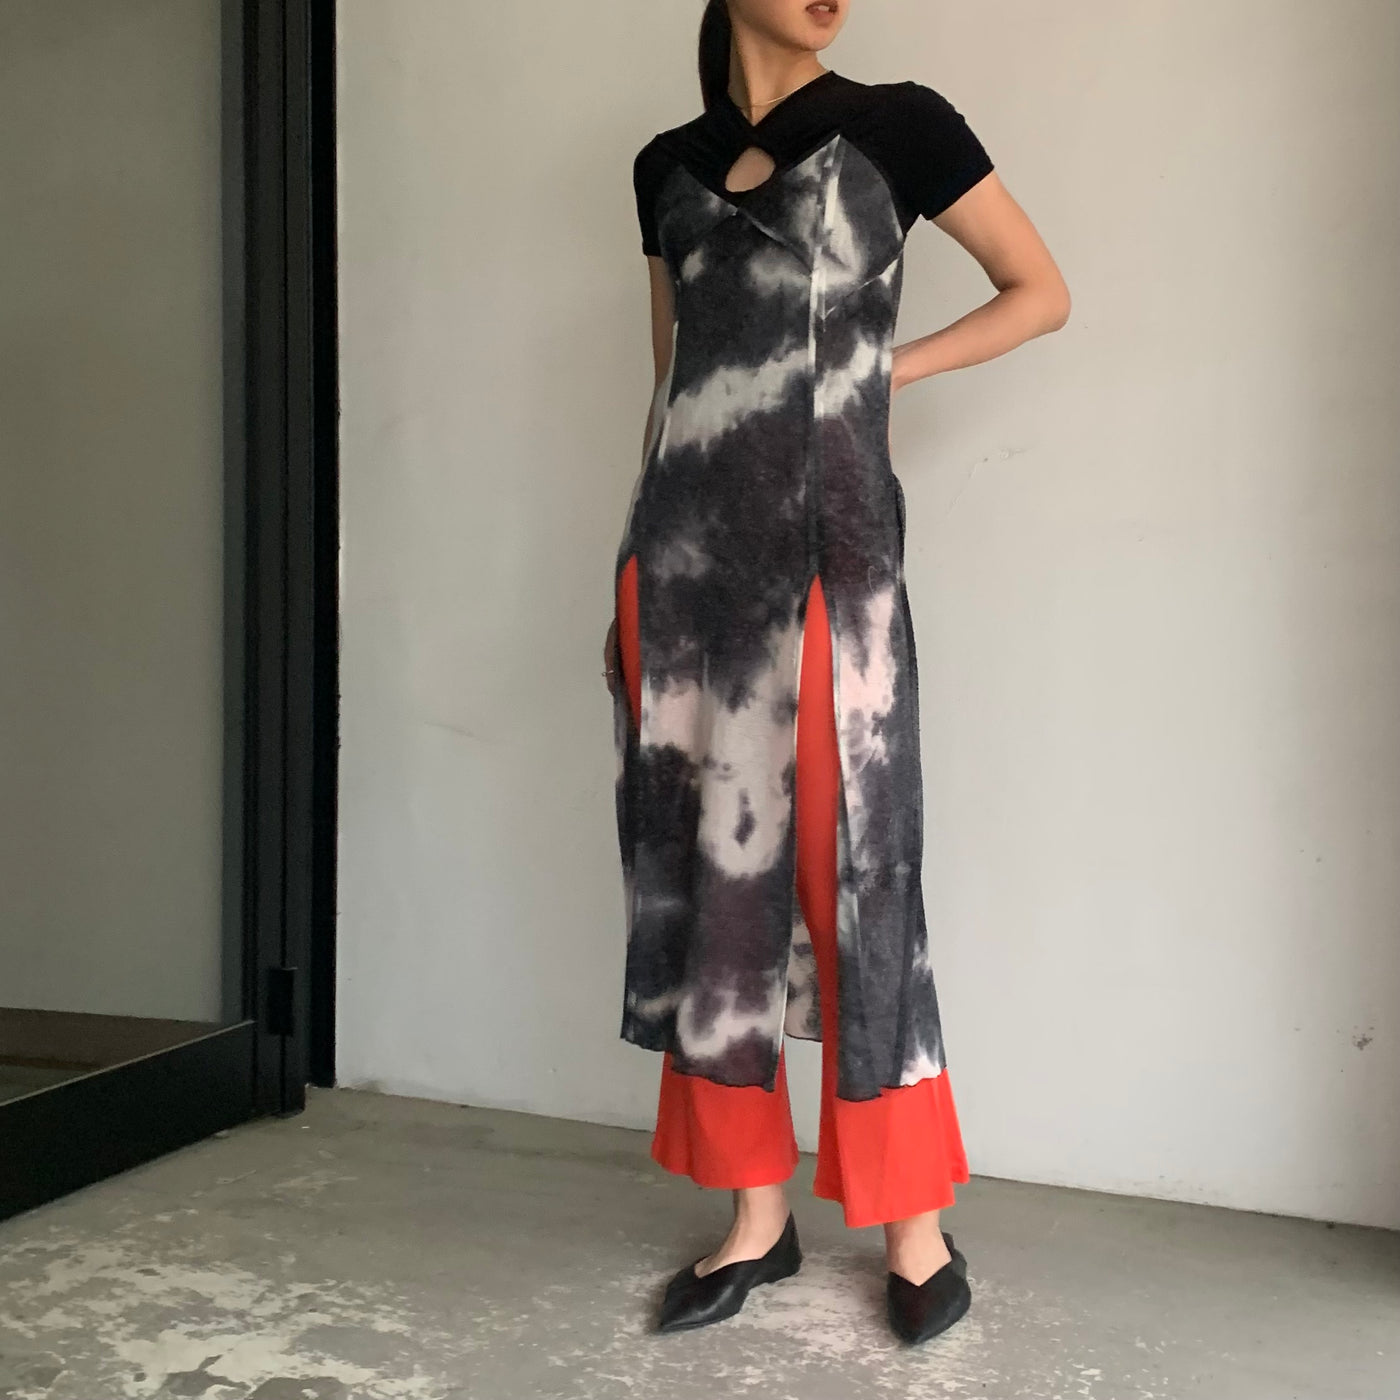 Monse cut-out Detailing Maxi Slip Dress - Farfetch